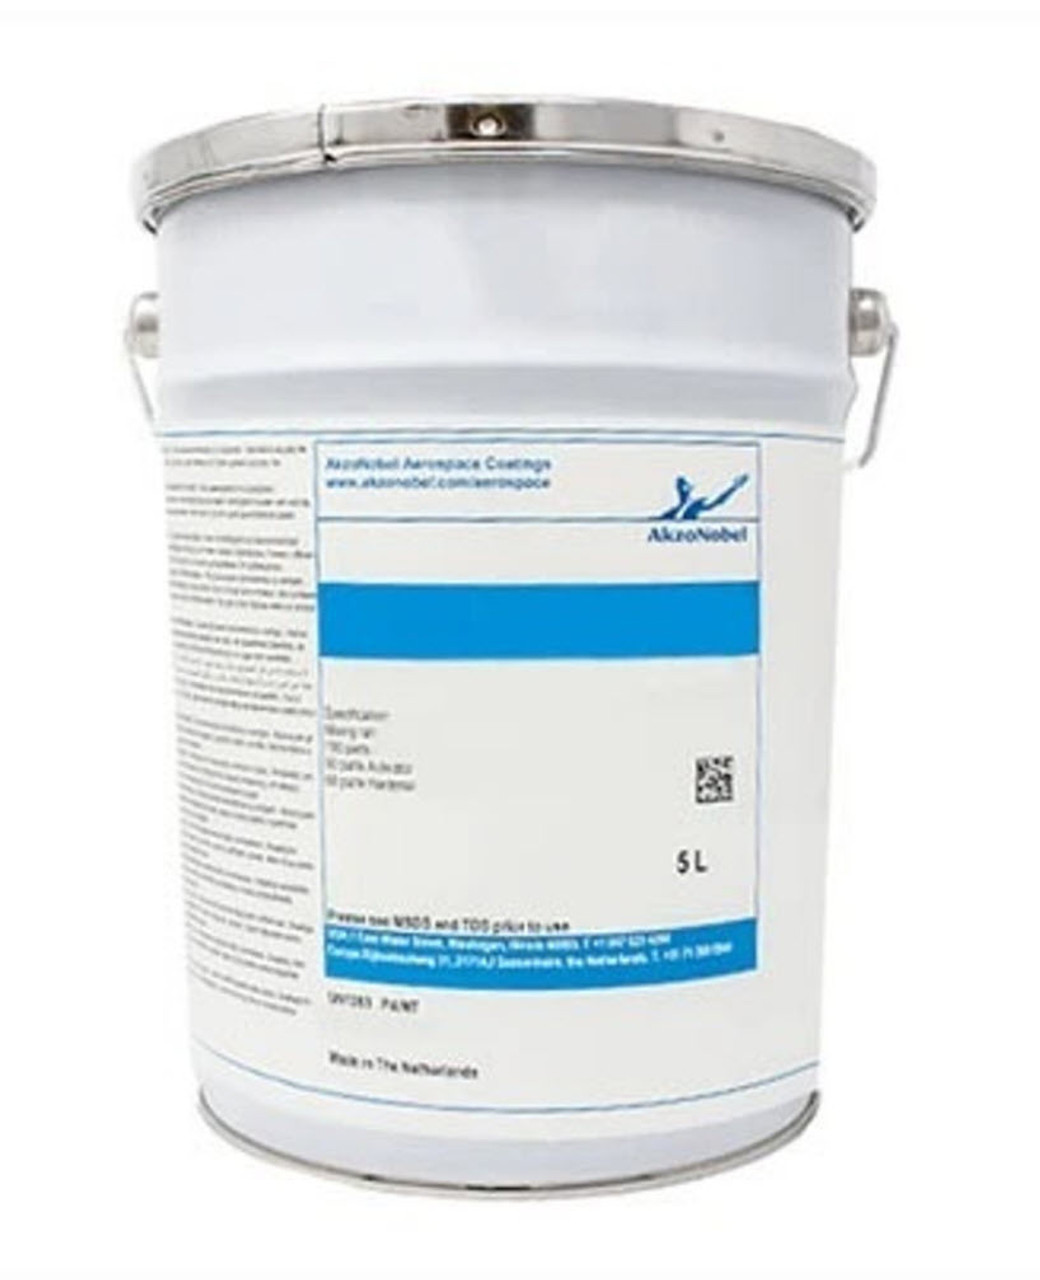 AkzoNobel Polyurethane Topcoat - 1.5 Quart Can